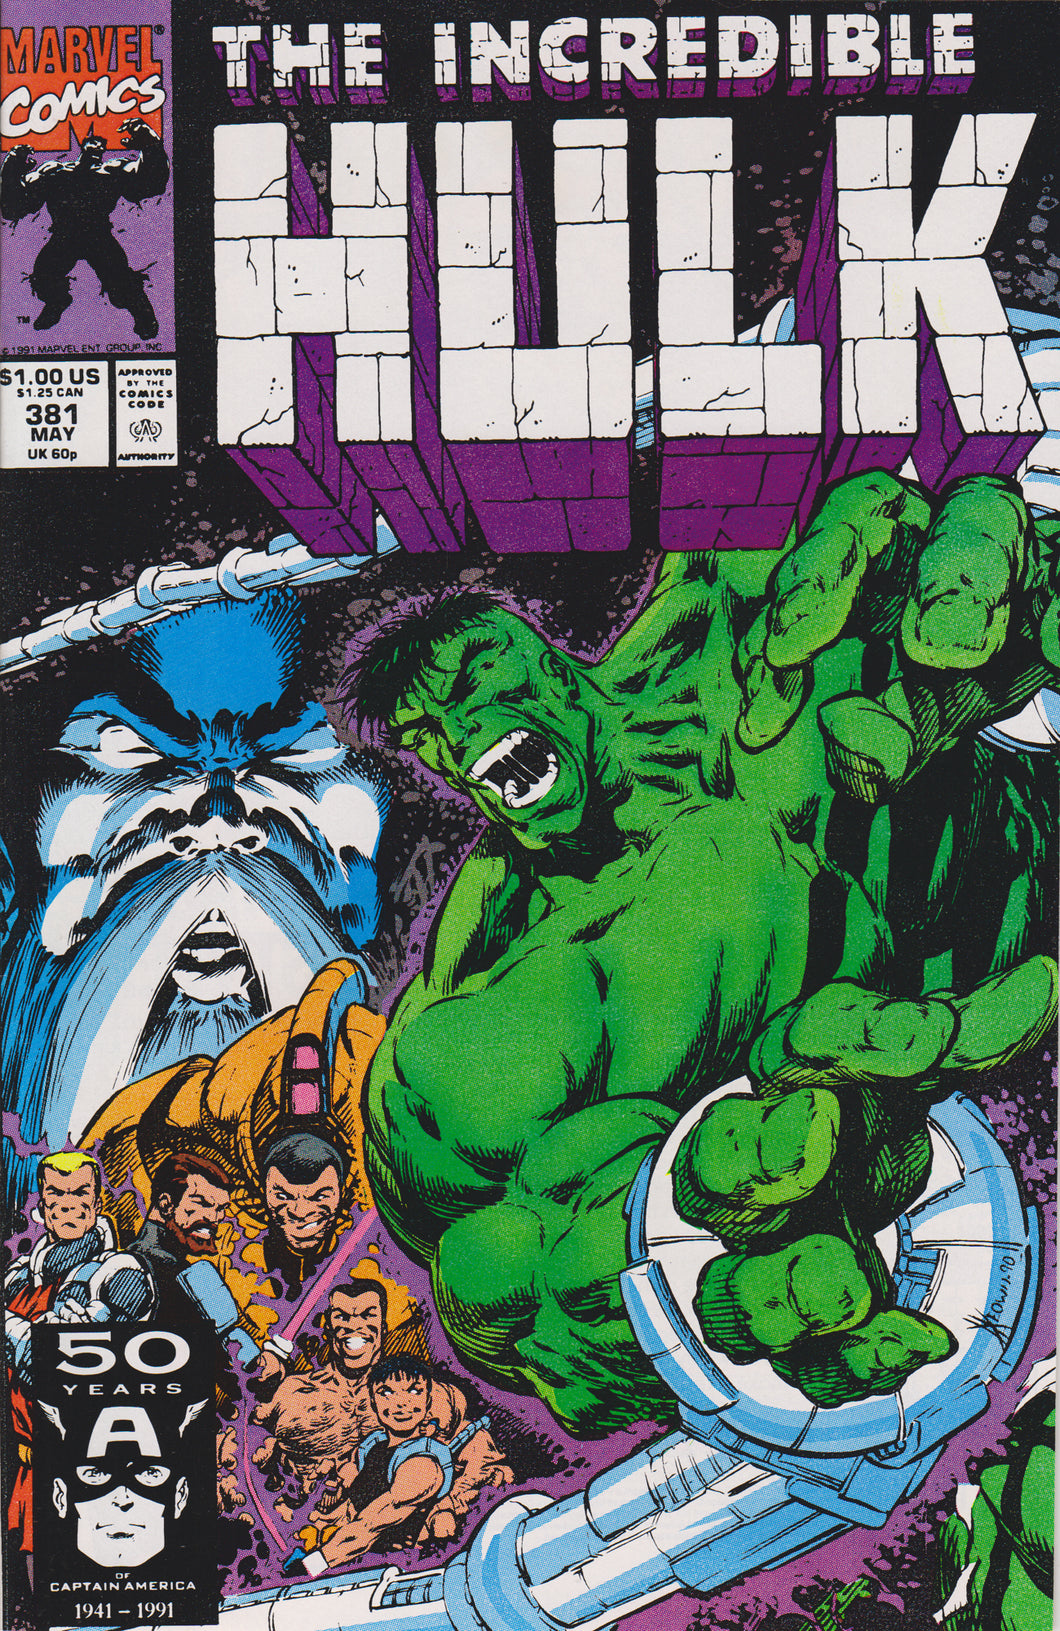 THE INCREDIBLE HULK #381 COMIC BOOK ~ Marvel Comics